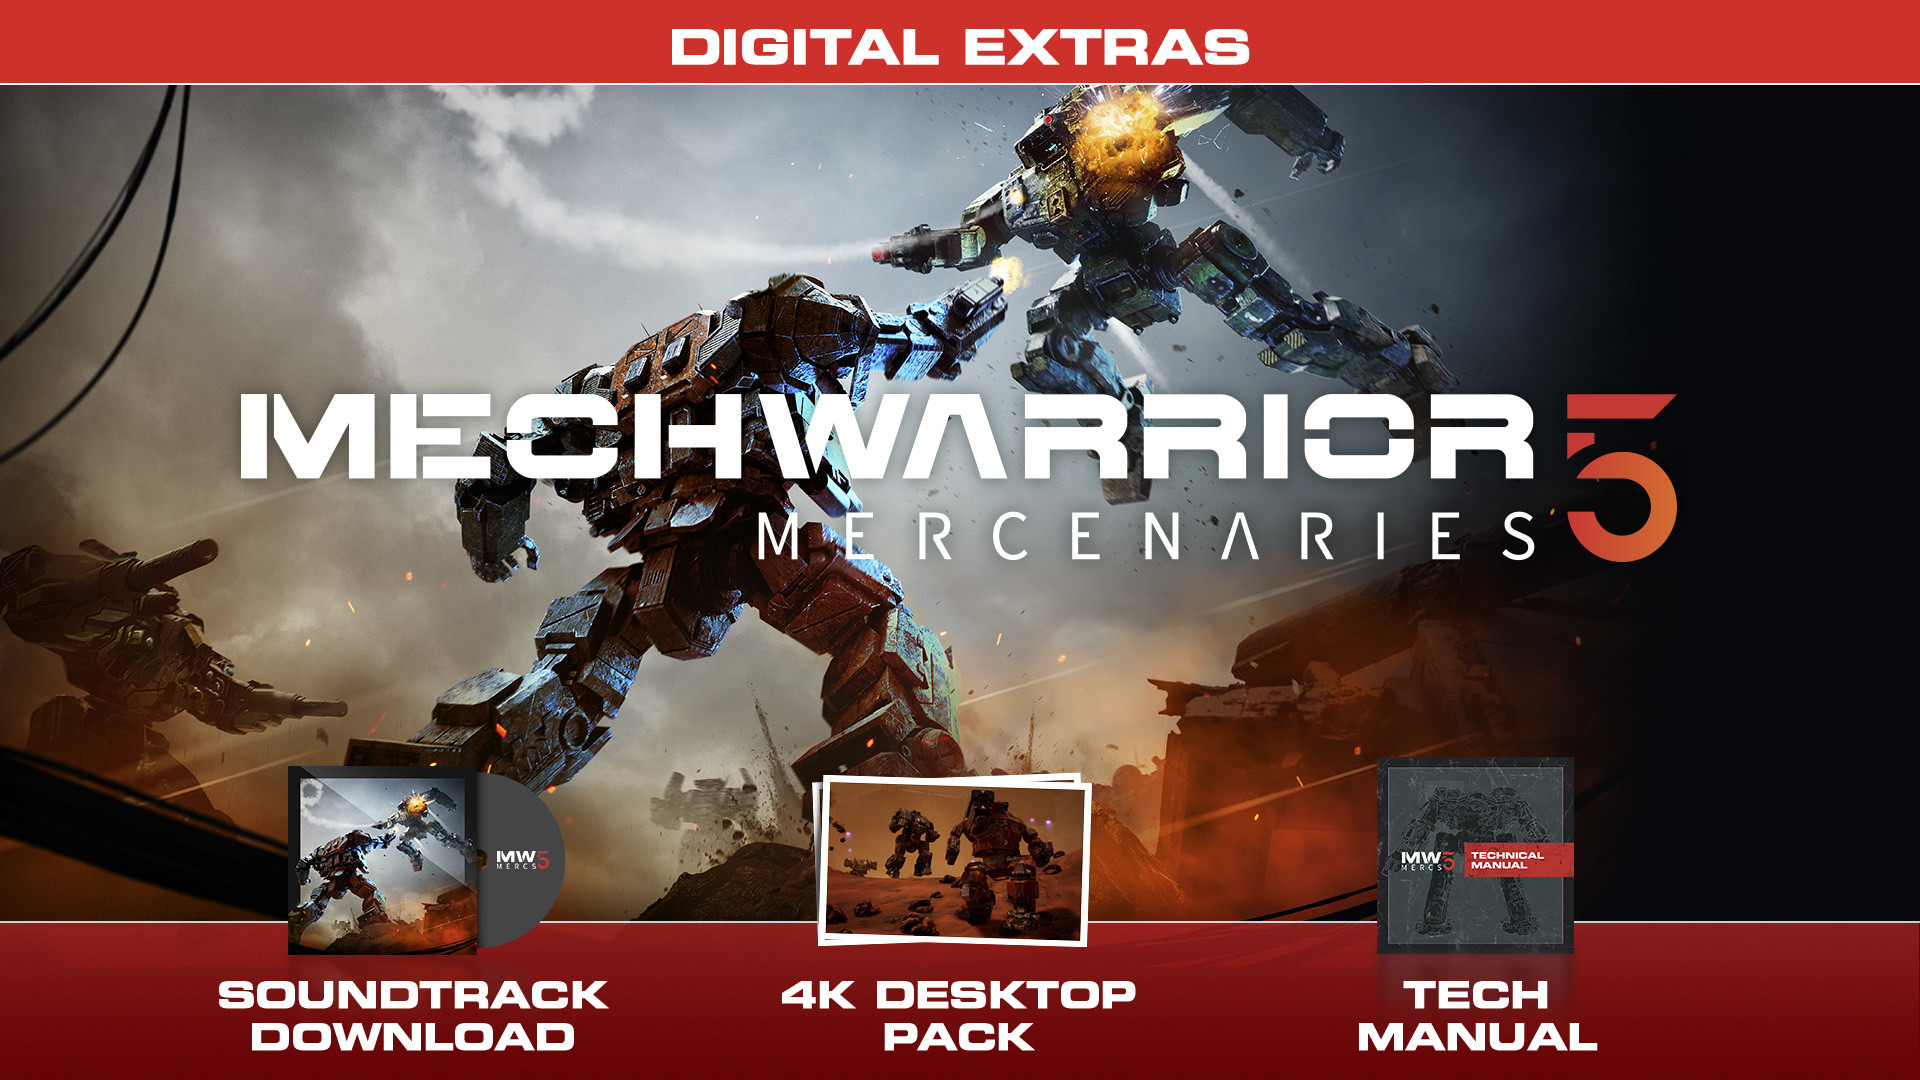 [$ 7.89] MechWarrior 5: Mercenaries - Digital Extras Content DLC Steam CD Key